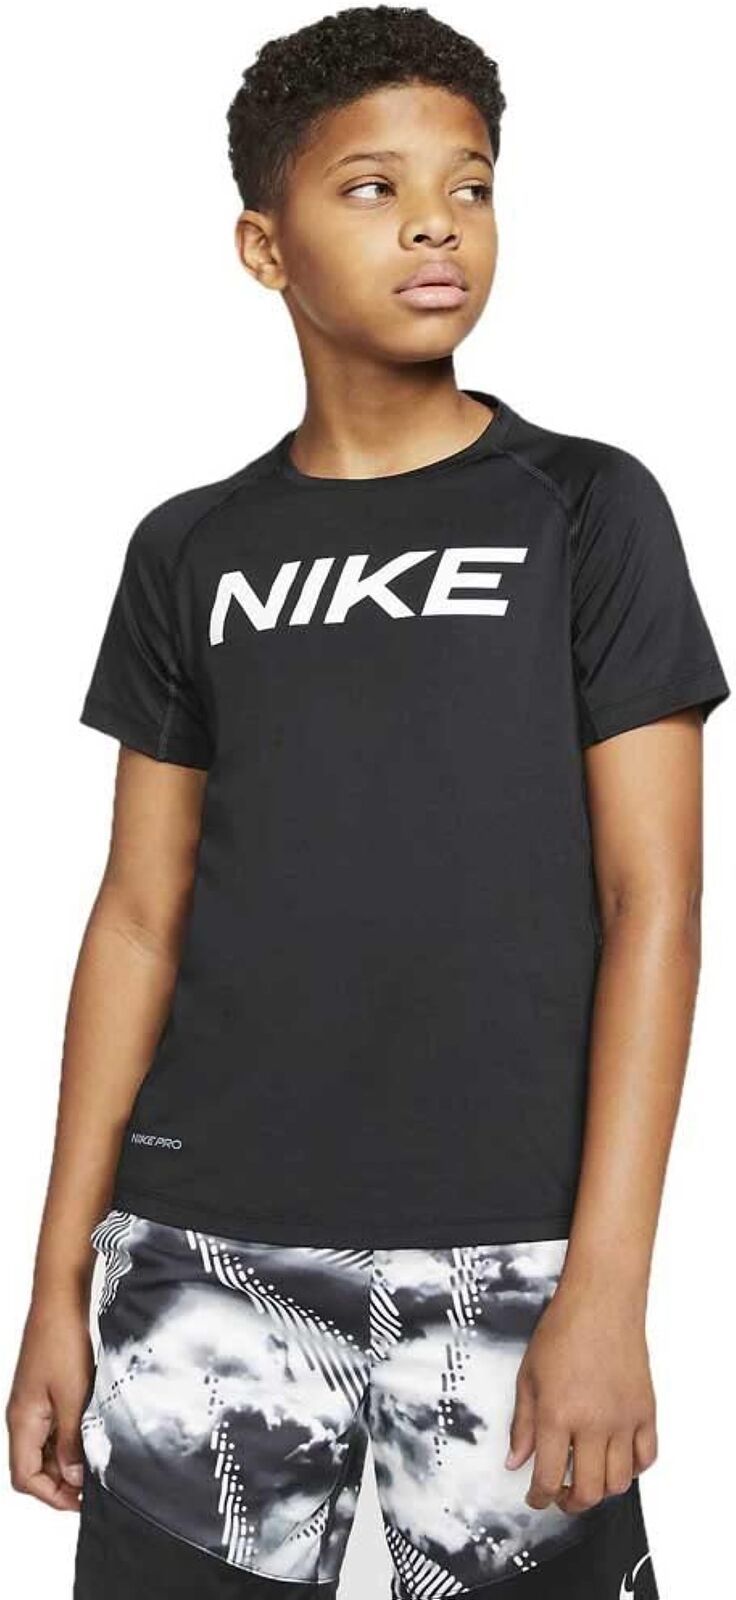 Primary image for Nike Big Boys Pro Short-Sleeve T-Shirt,Black/White,Small